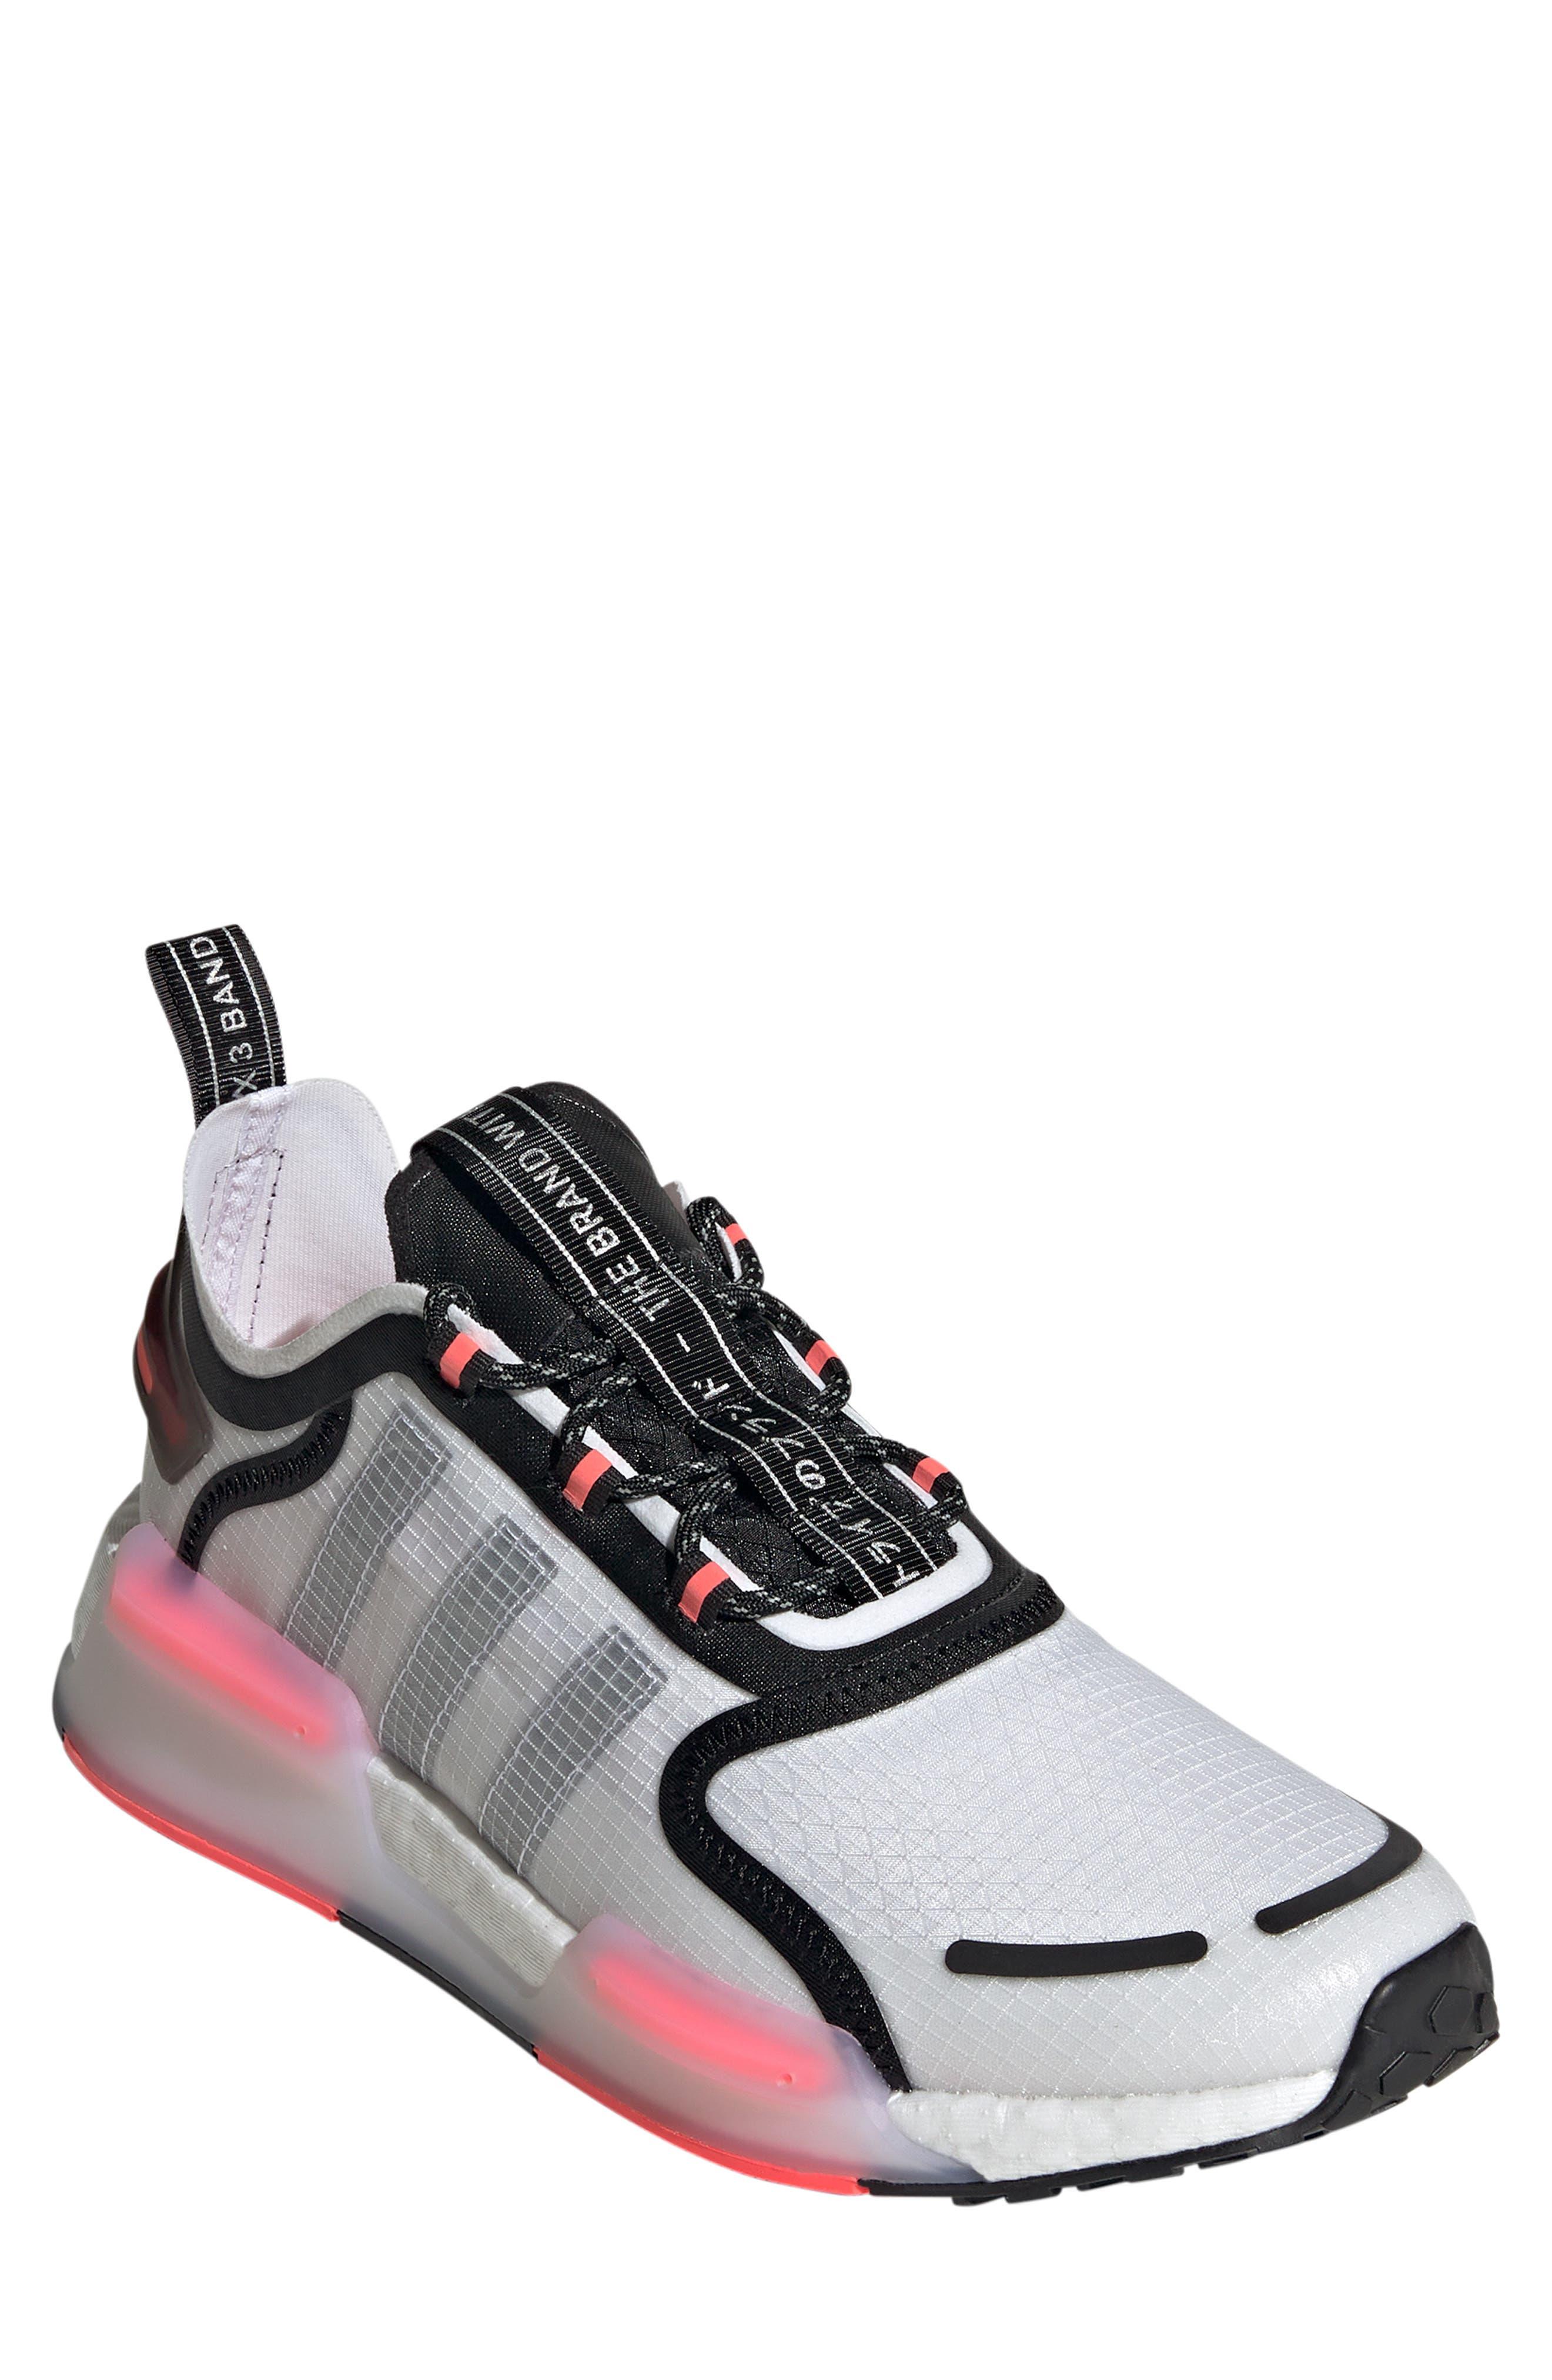 adidas Nmd_v3 Running Shoe in | for White Men Lyst